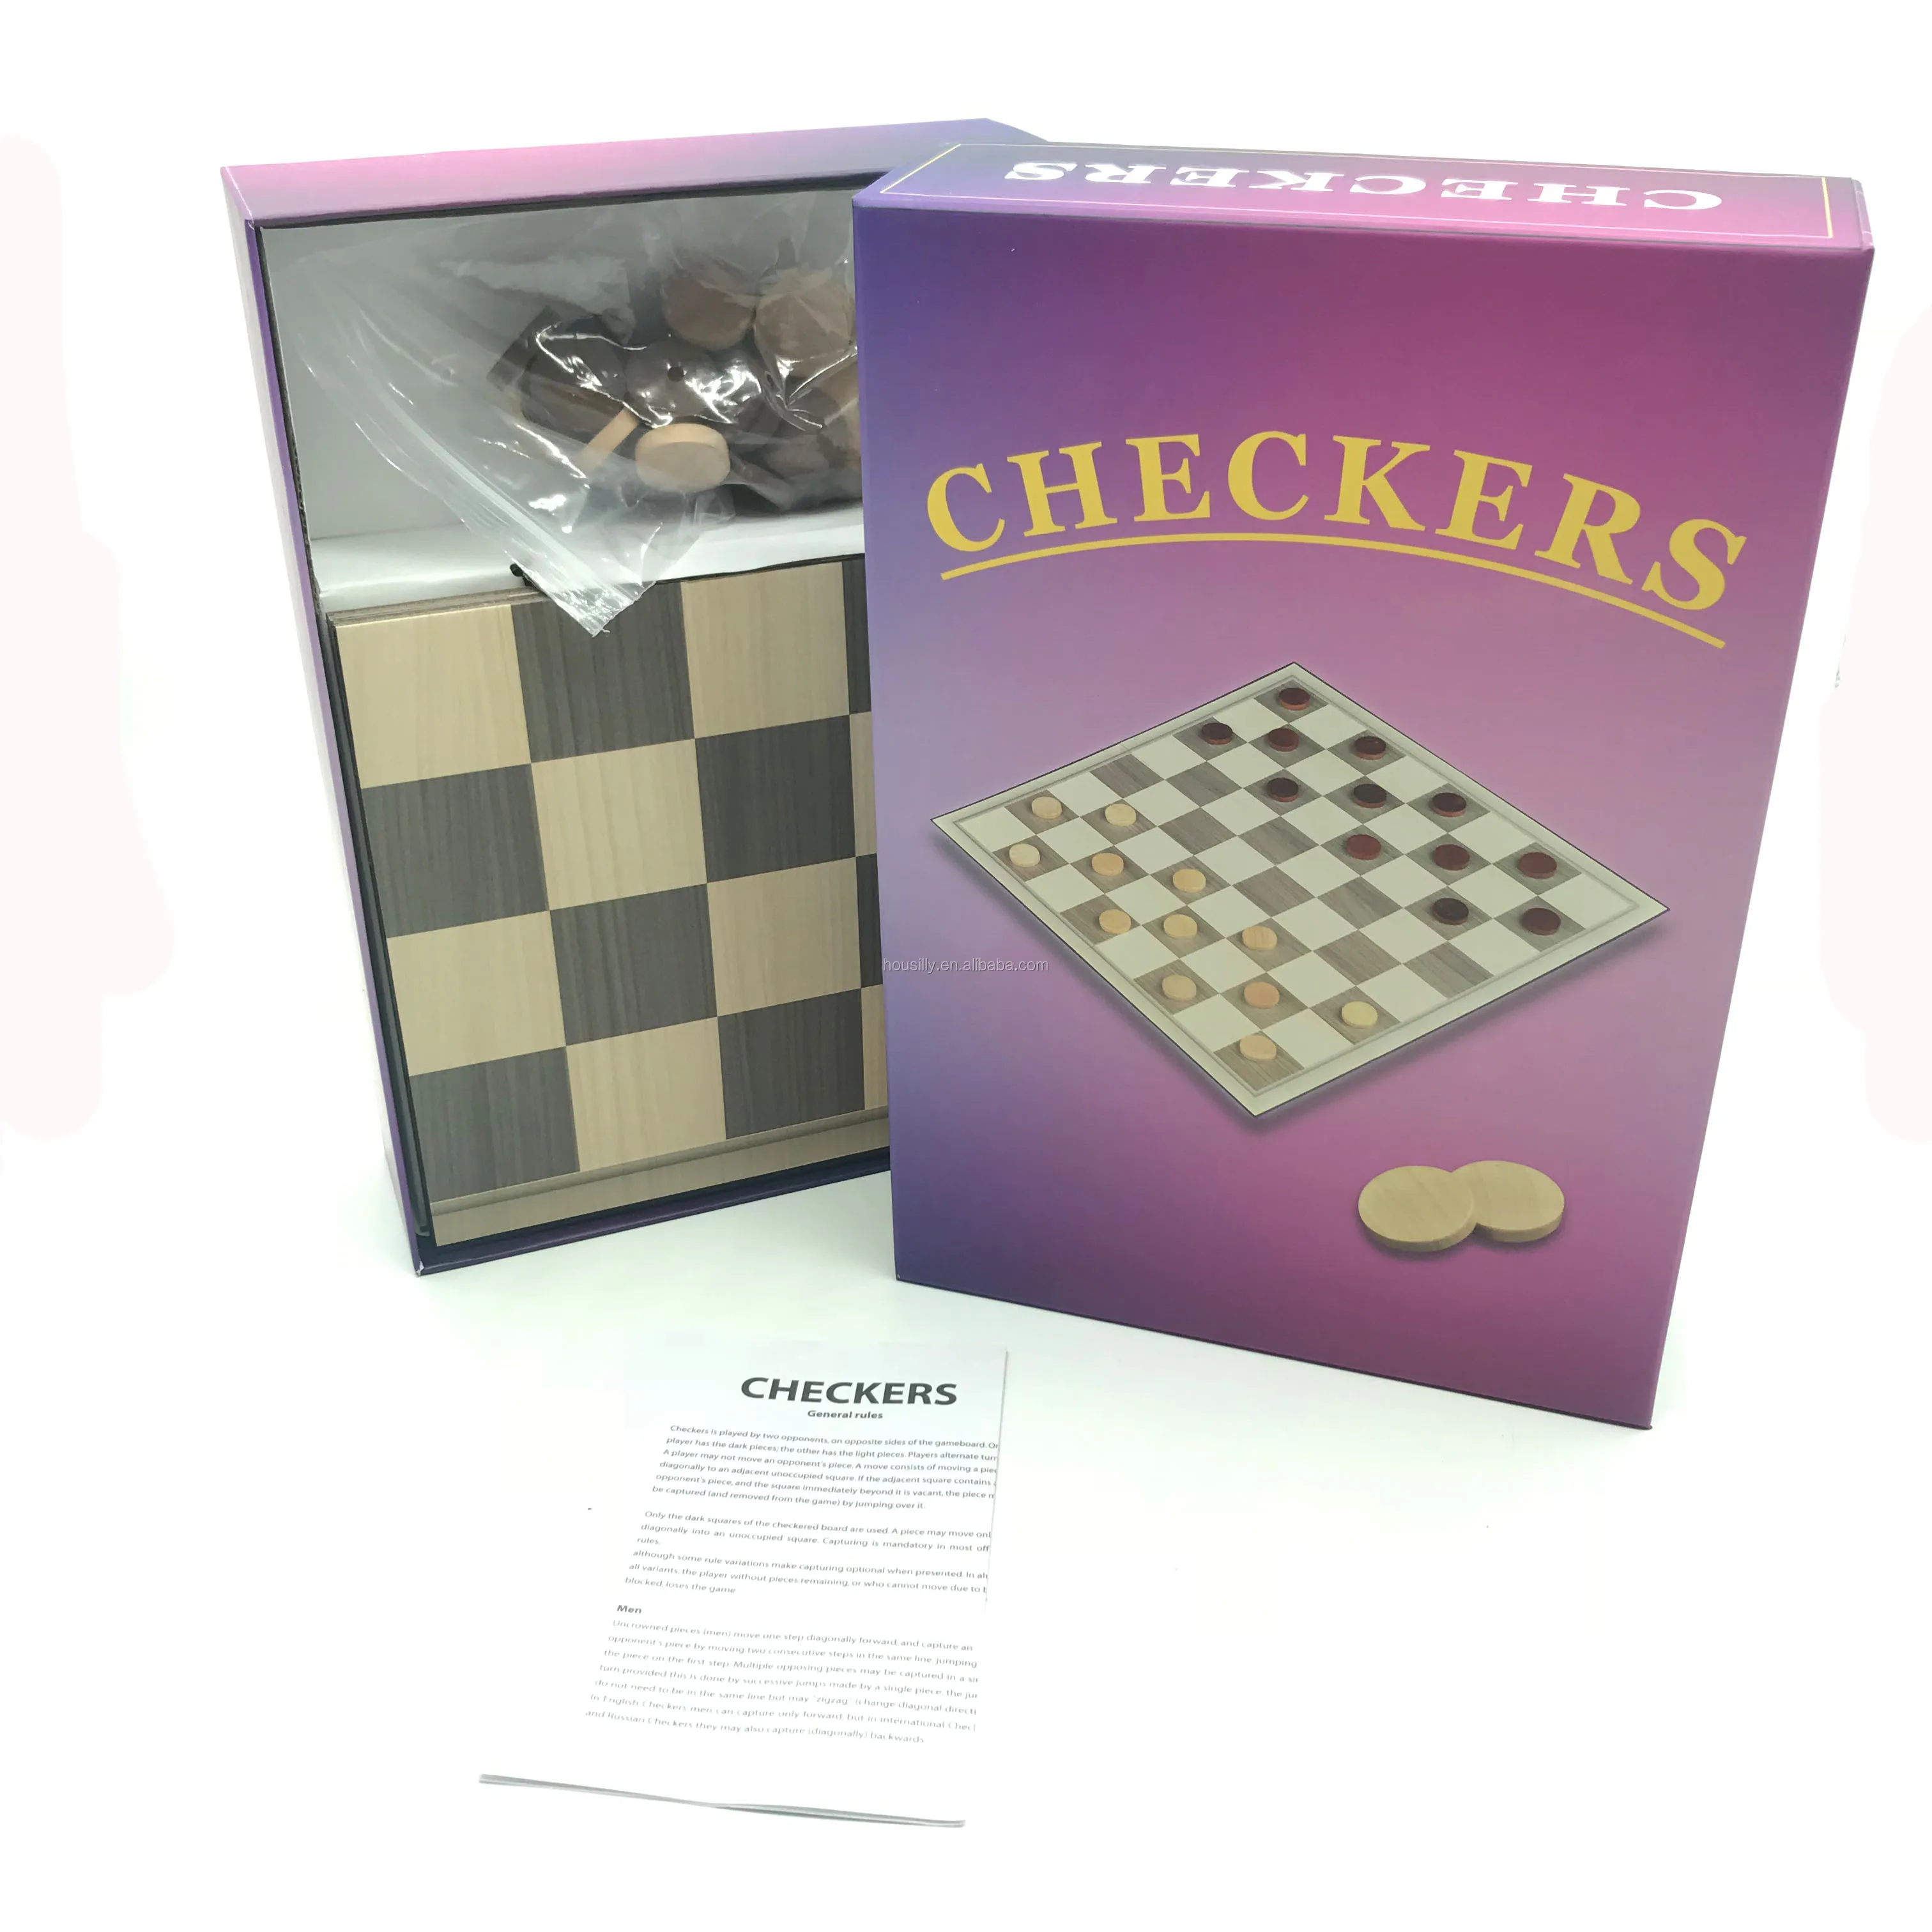 shuttie position in checkers